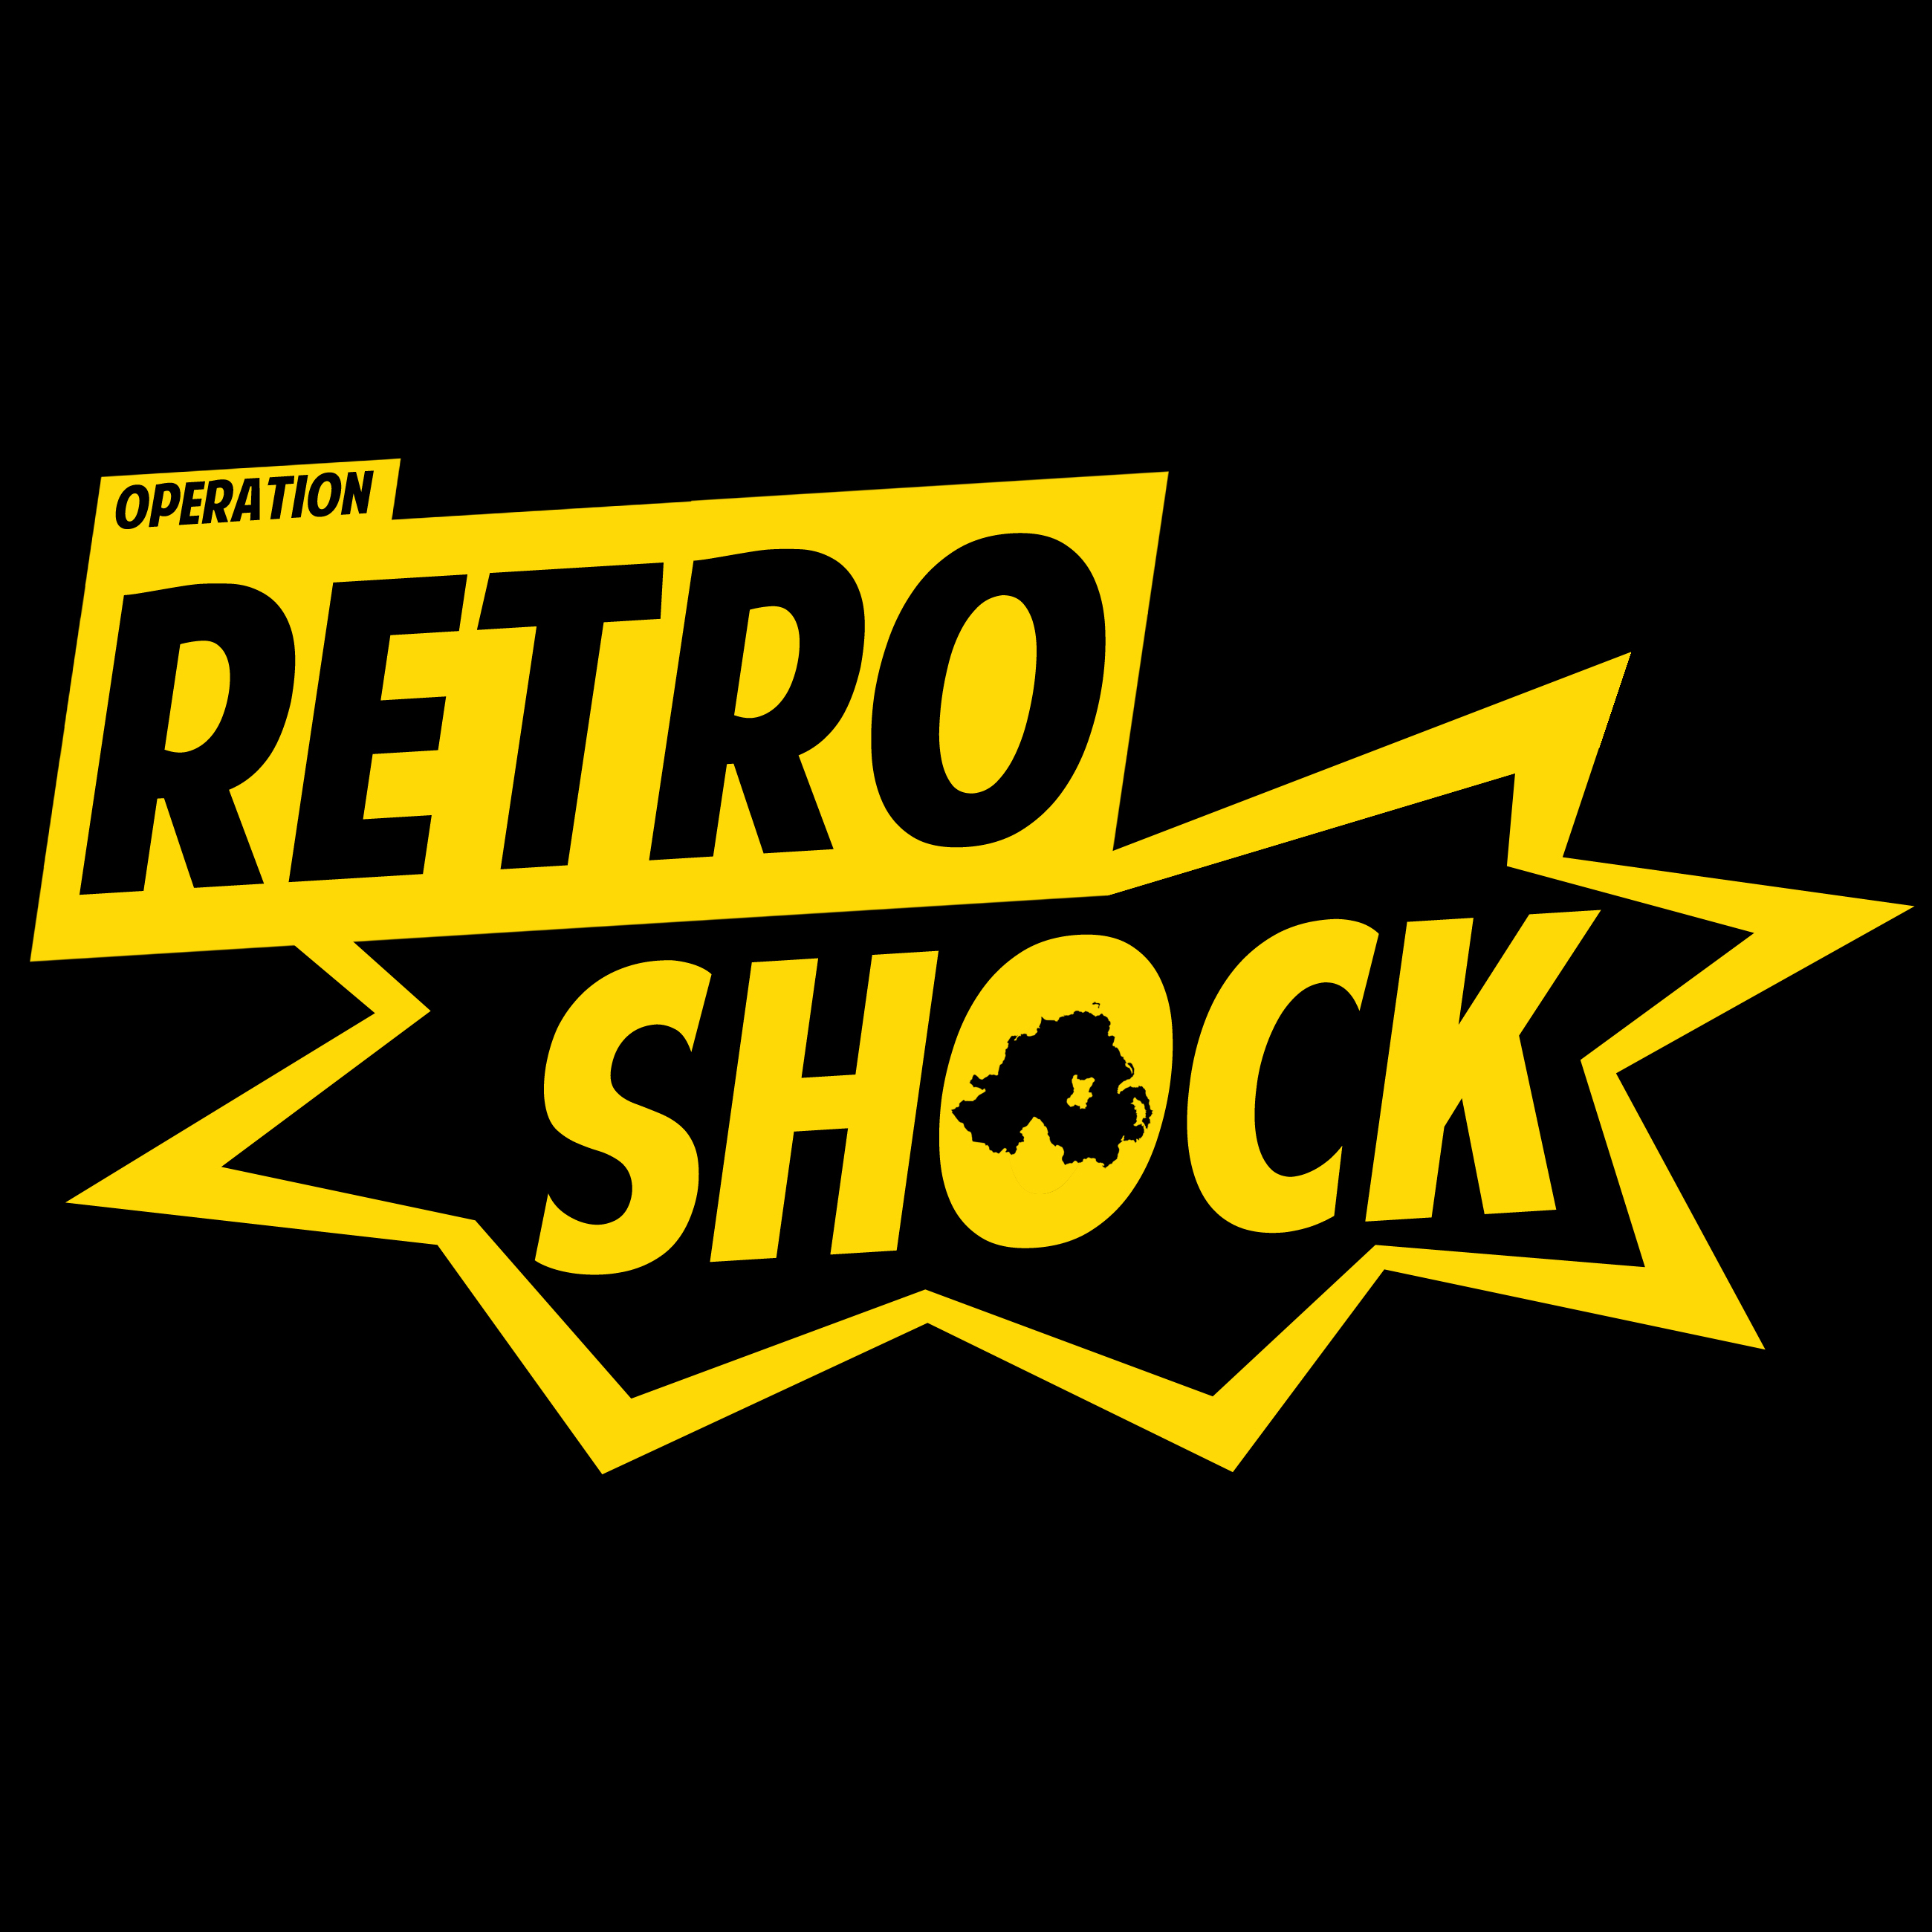 Operation Retroshock - Summer 2018 PSA (Summer Break, Announcement & Coming Soon)